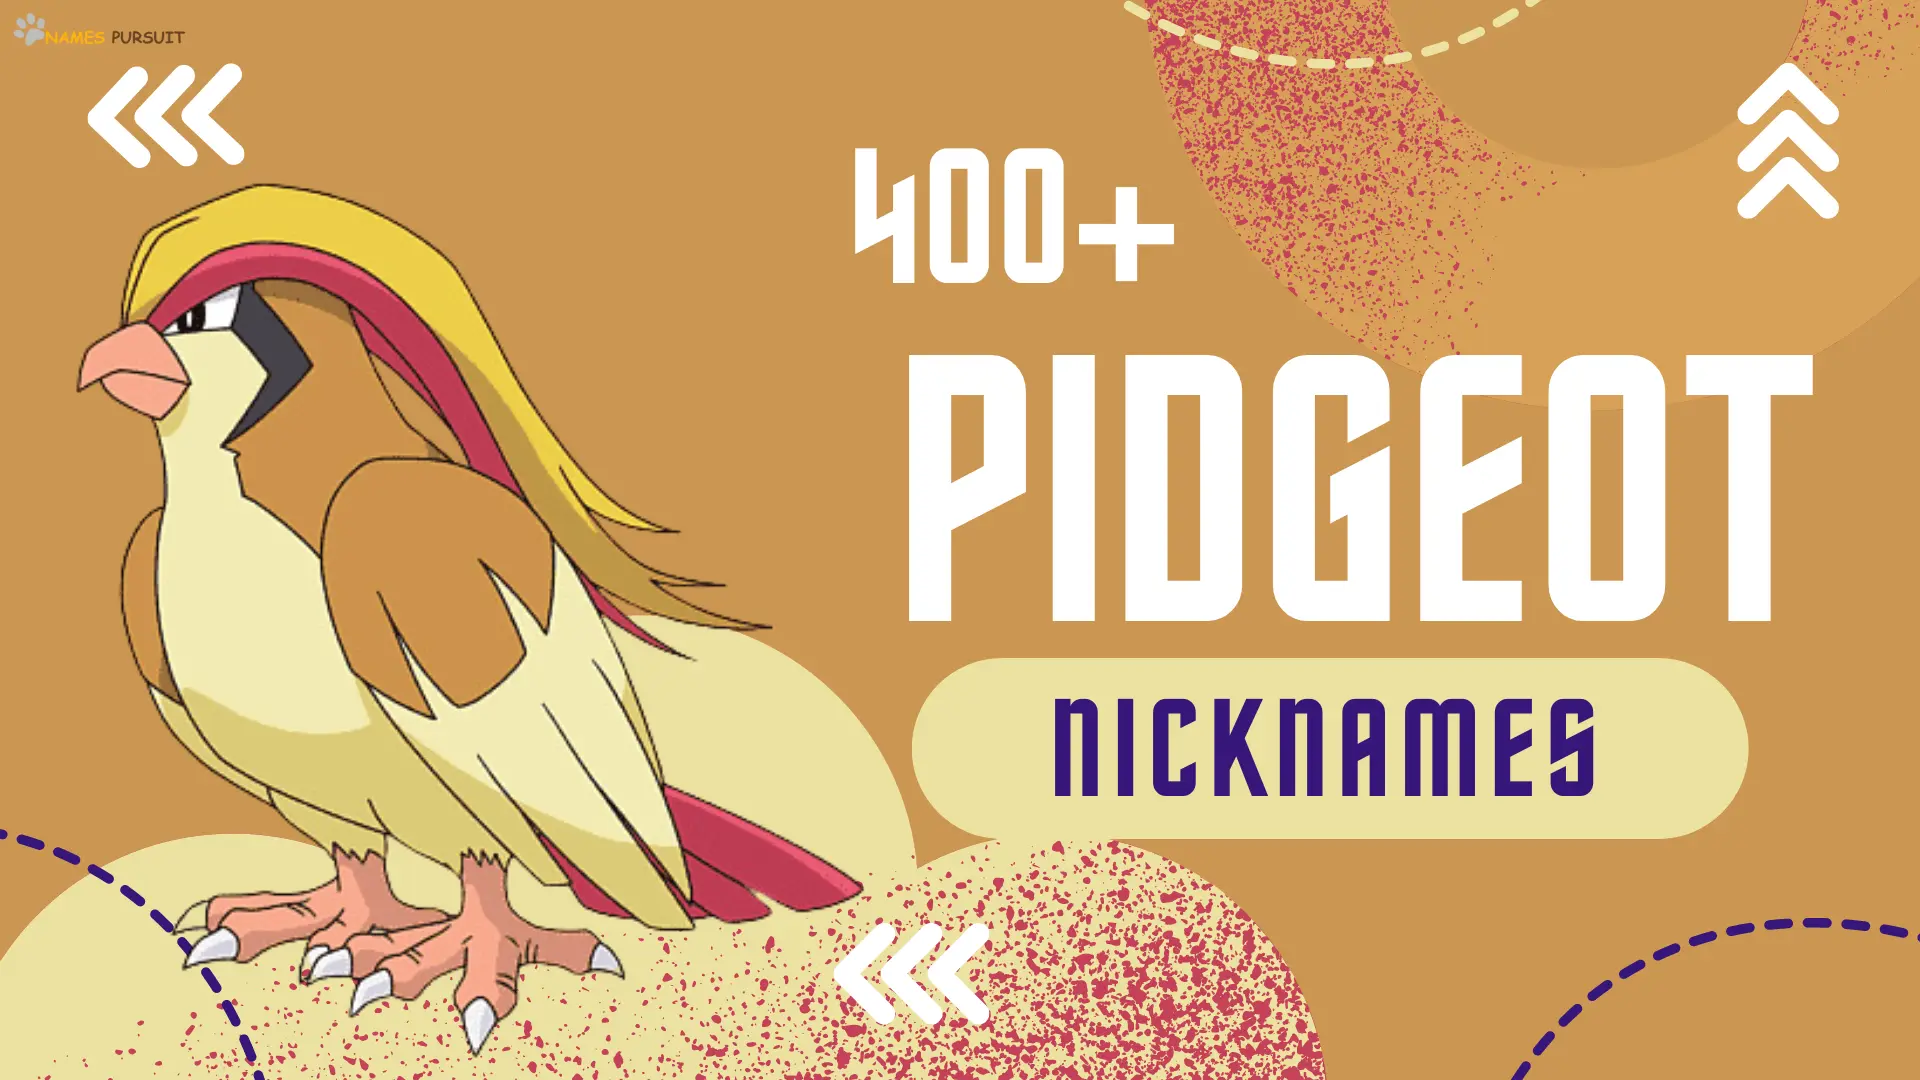 Pidgeot Nicknames